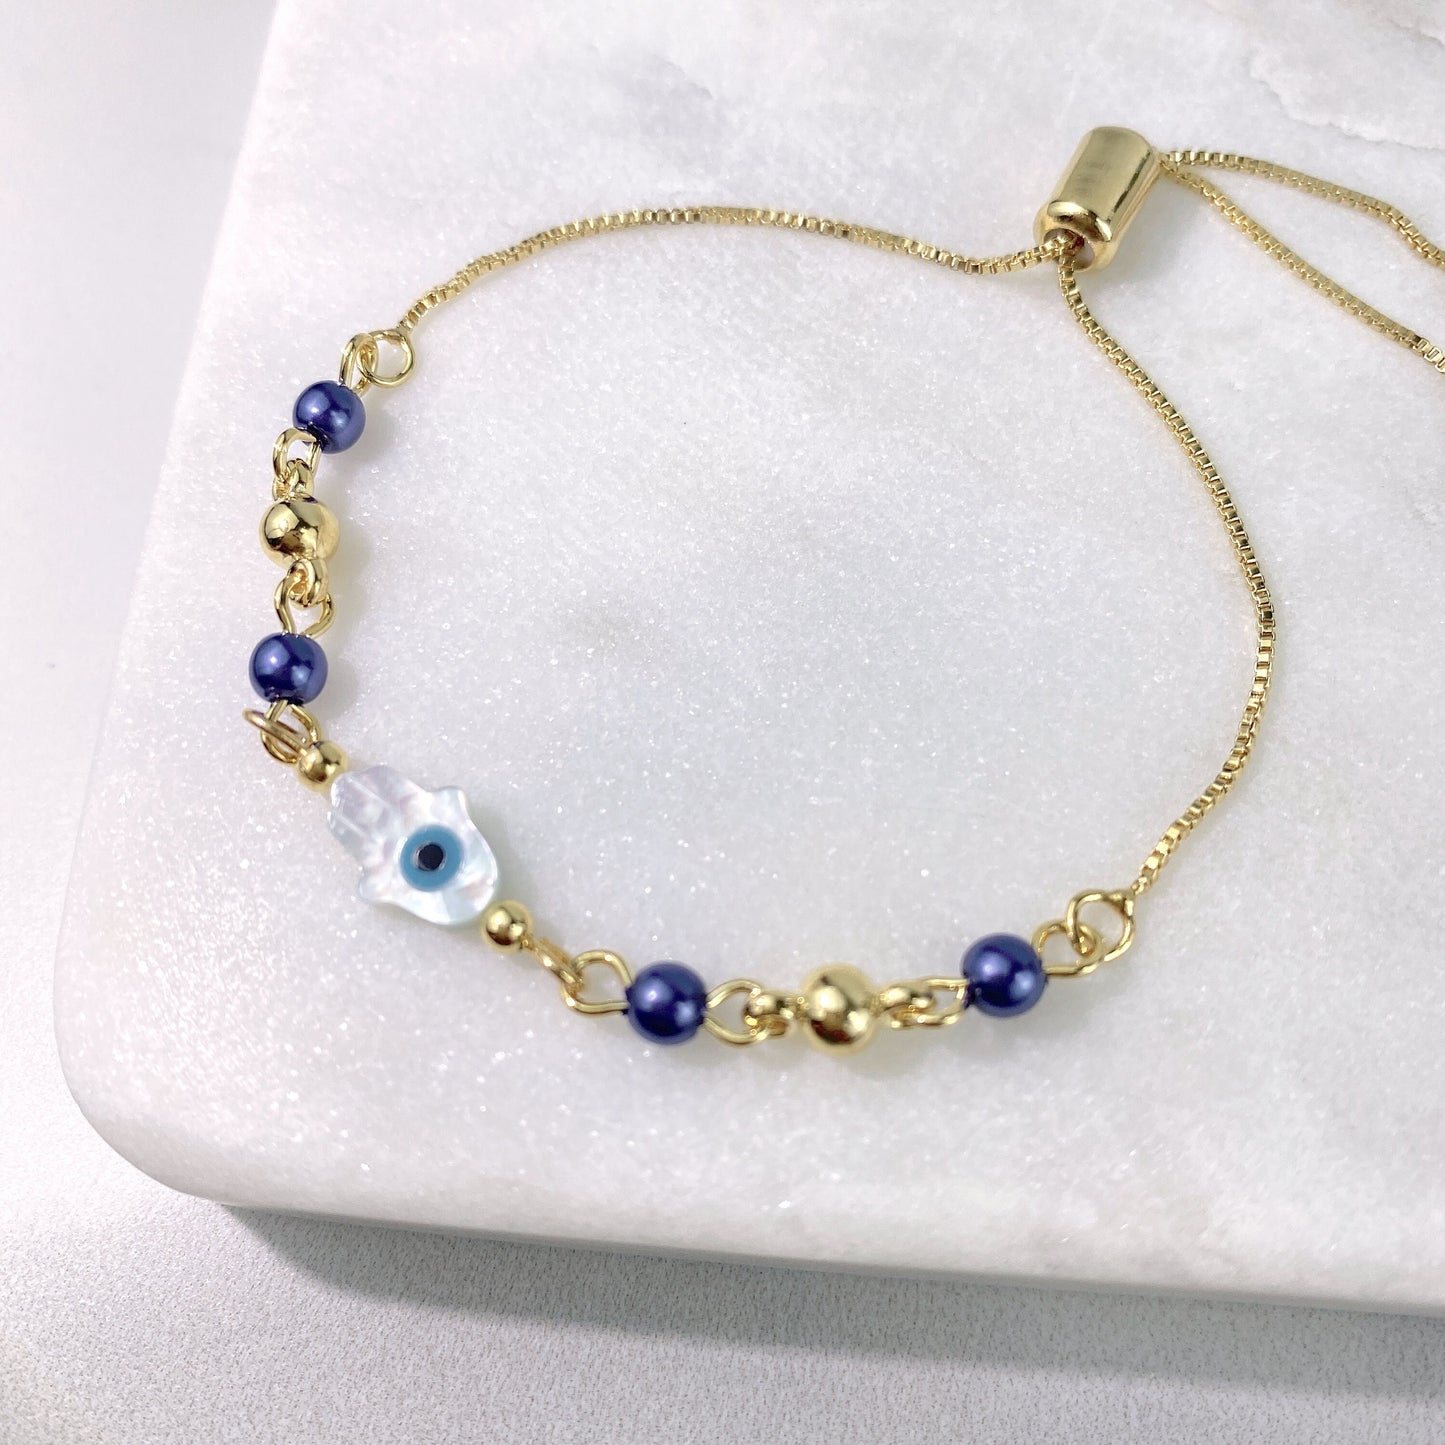 18k Gold Filled 1mm Box Chain Blue & Gold Beads, Blue Eye Hamsa Hand, Adjustable Bracelet, Wholesale Jewelry Making Supplies